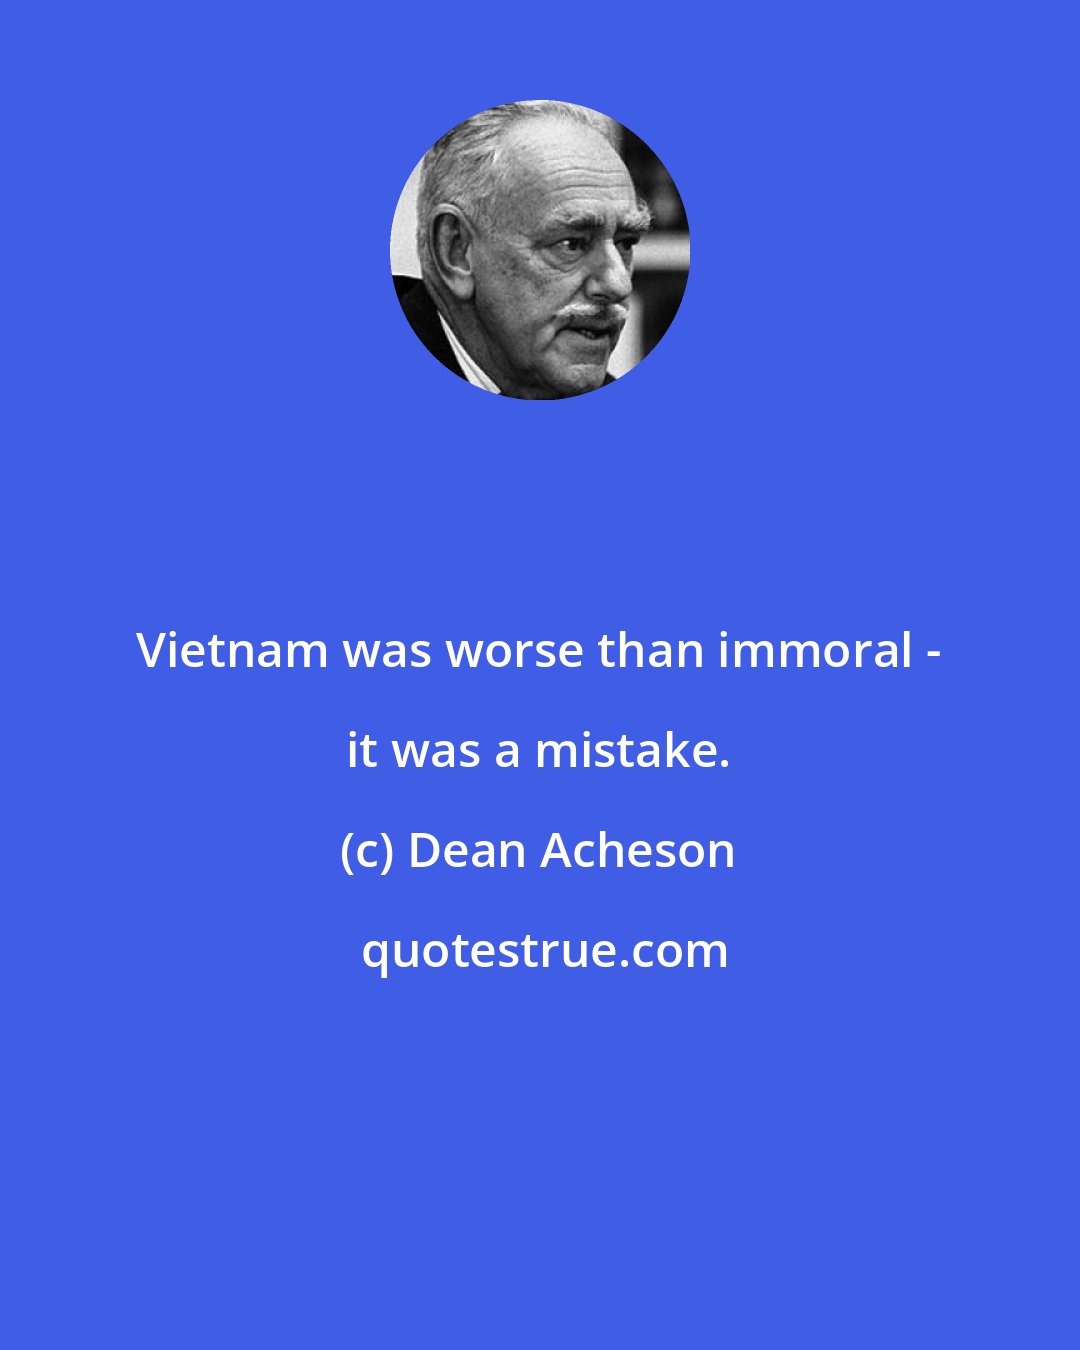 Dean Acheson: Vietnam was worse than immoral - it was a mistake.